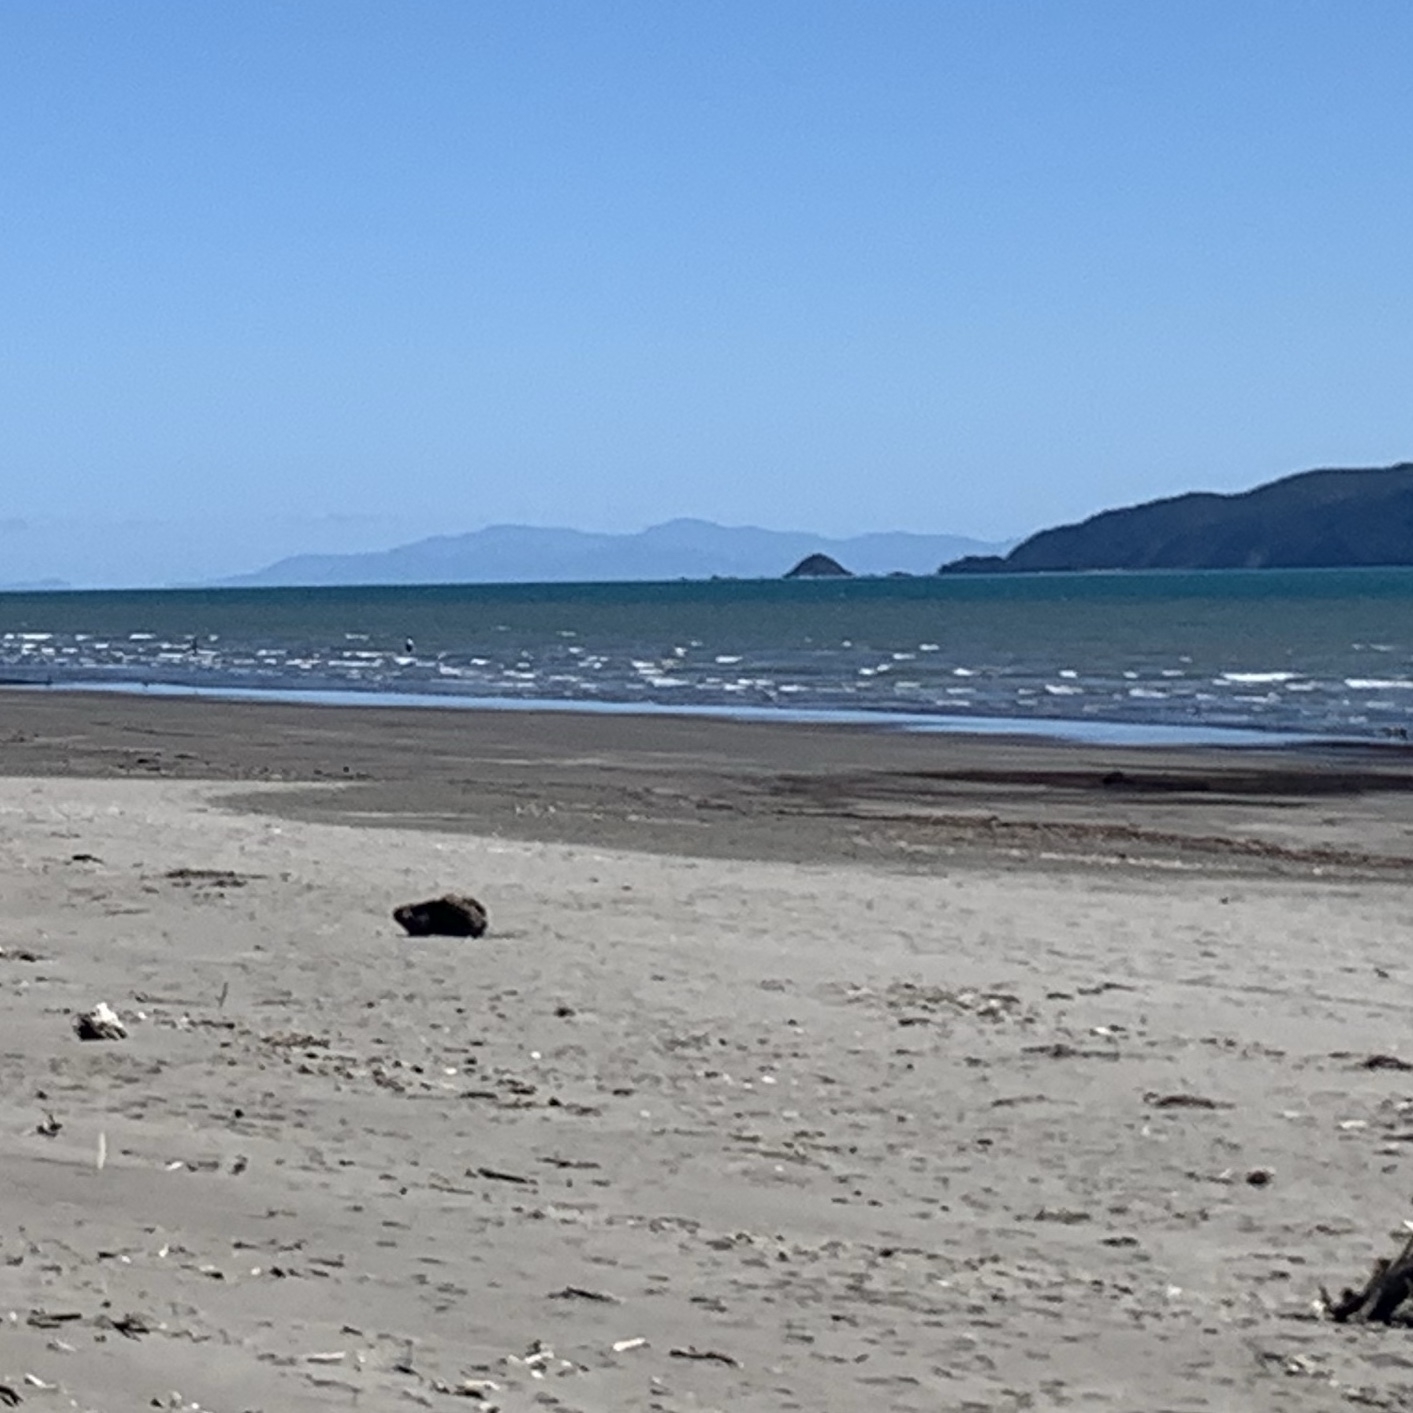 The South Island in the far diatance as taken from the beach at Waikanae